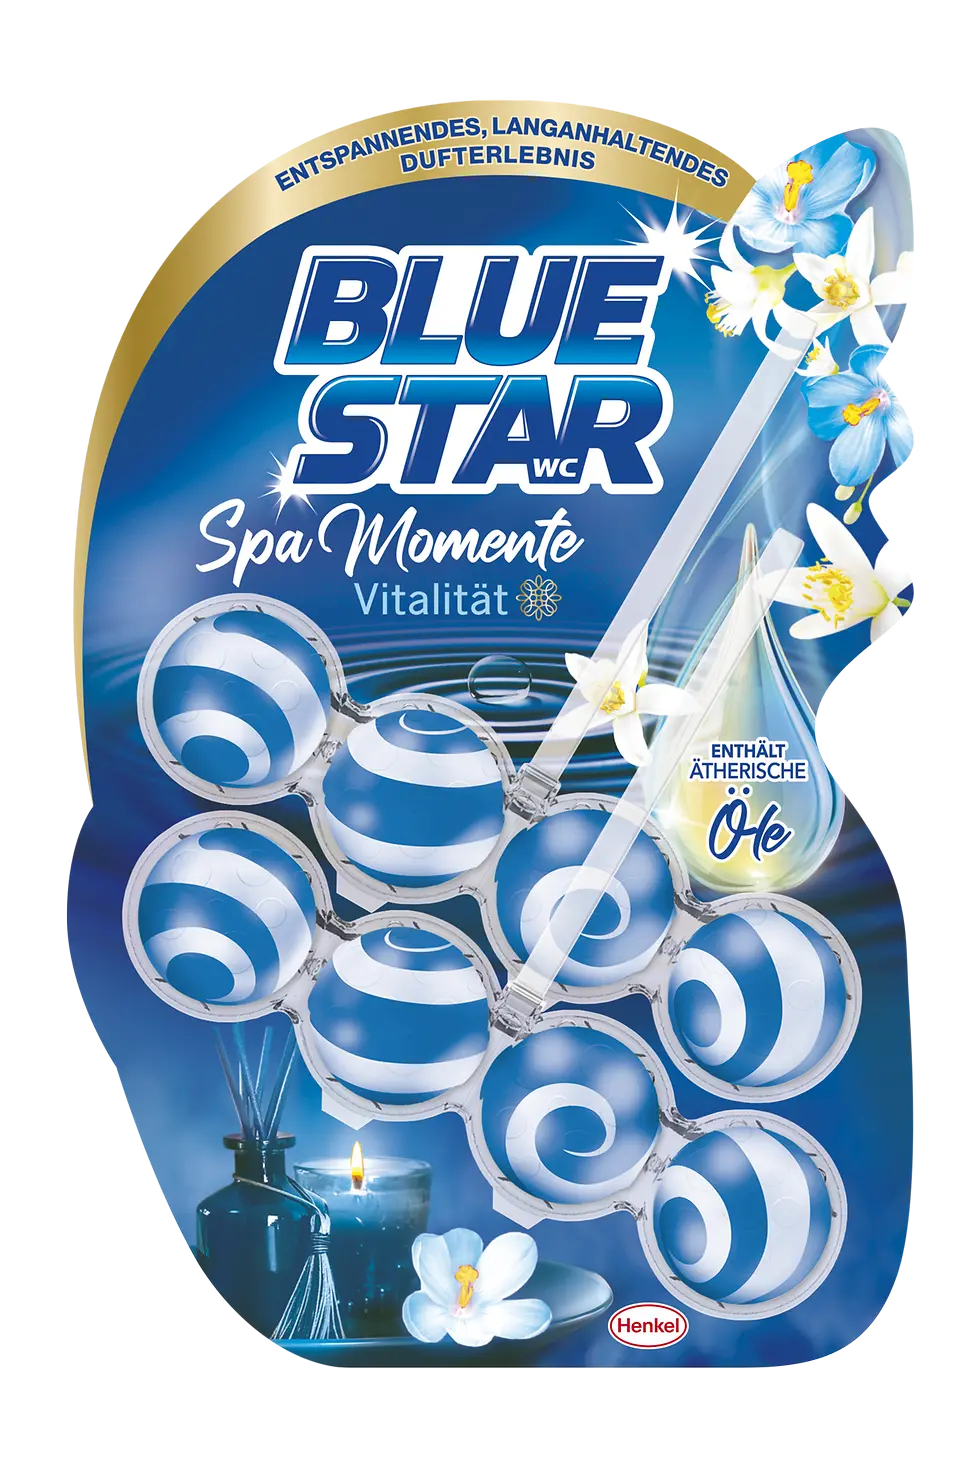 Spa Momente-Edition von Blue Star